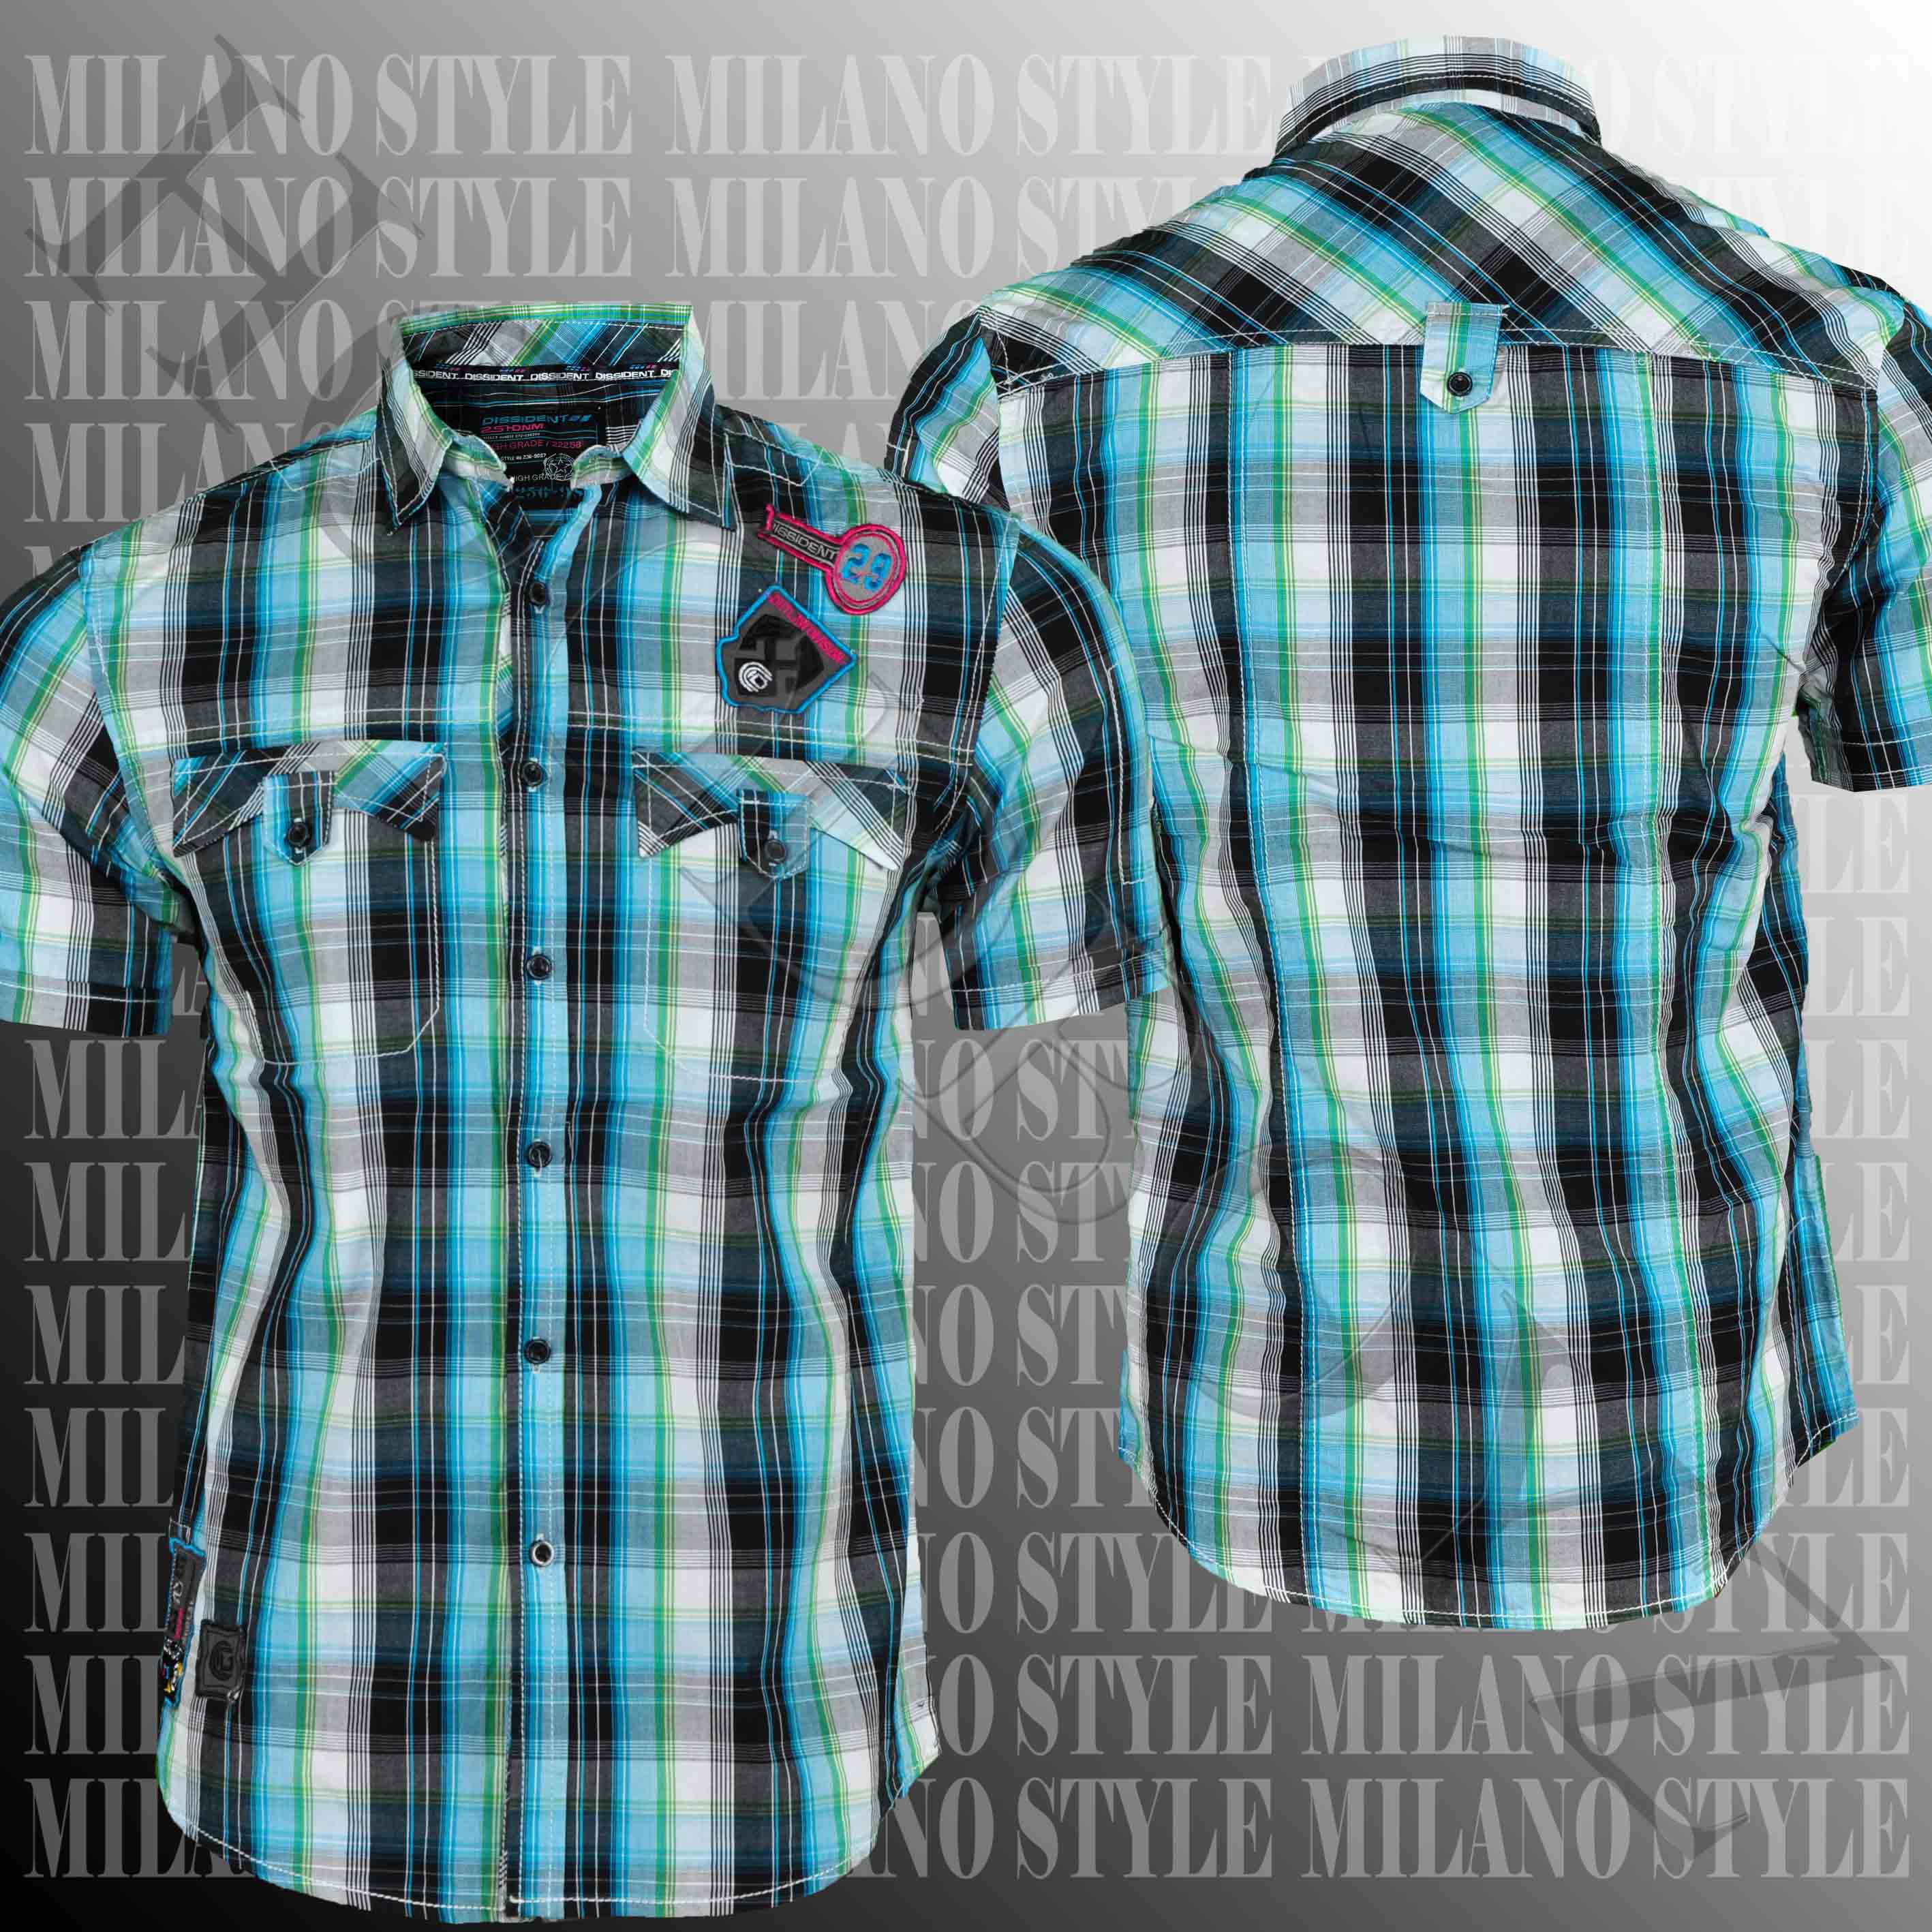 Foto Milano Style Dissident Camisas De Color Azul Oscuro foto 154812